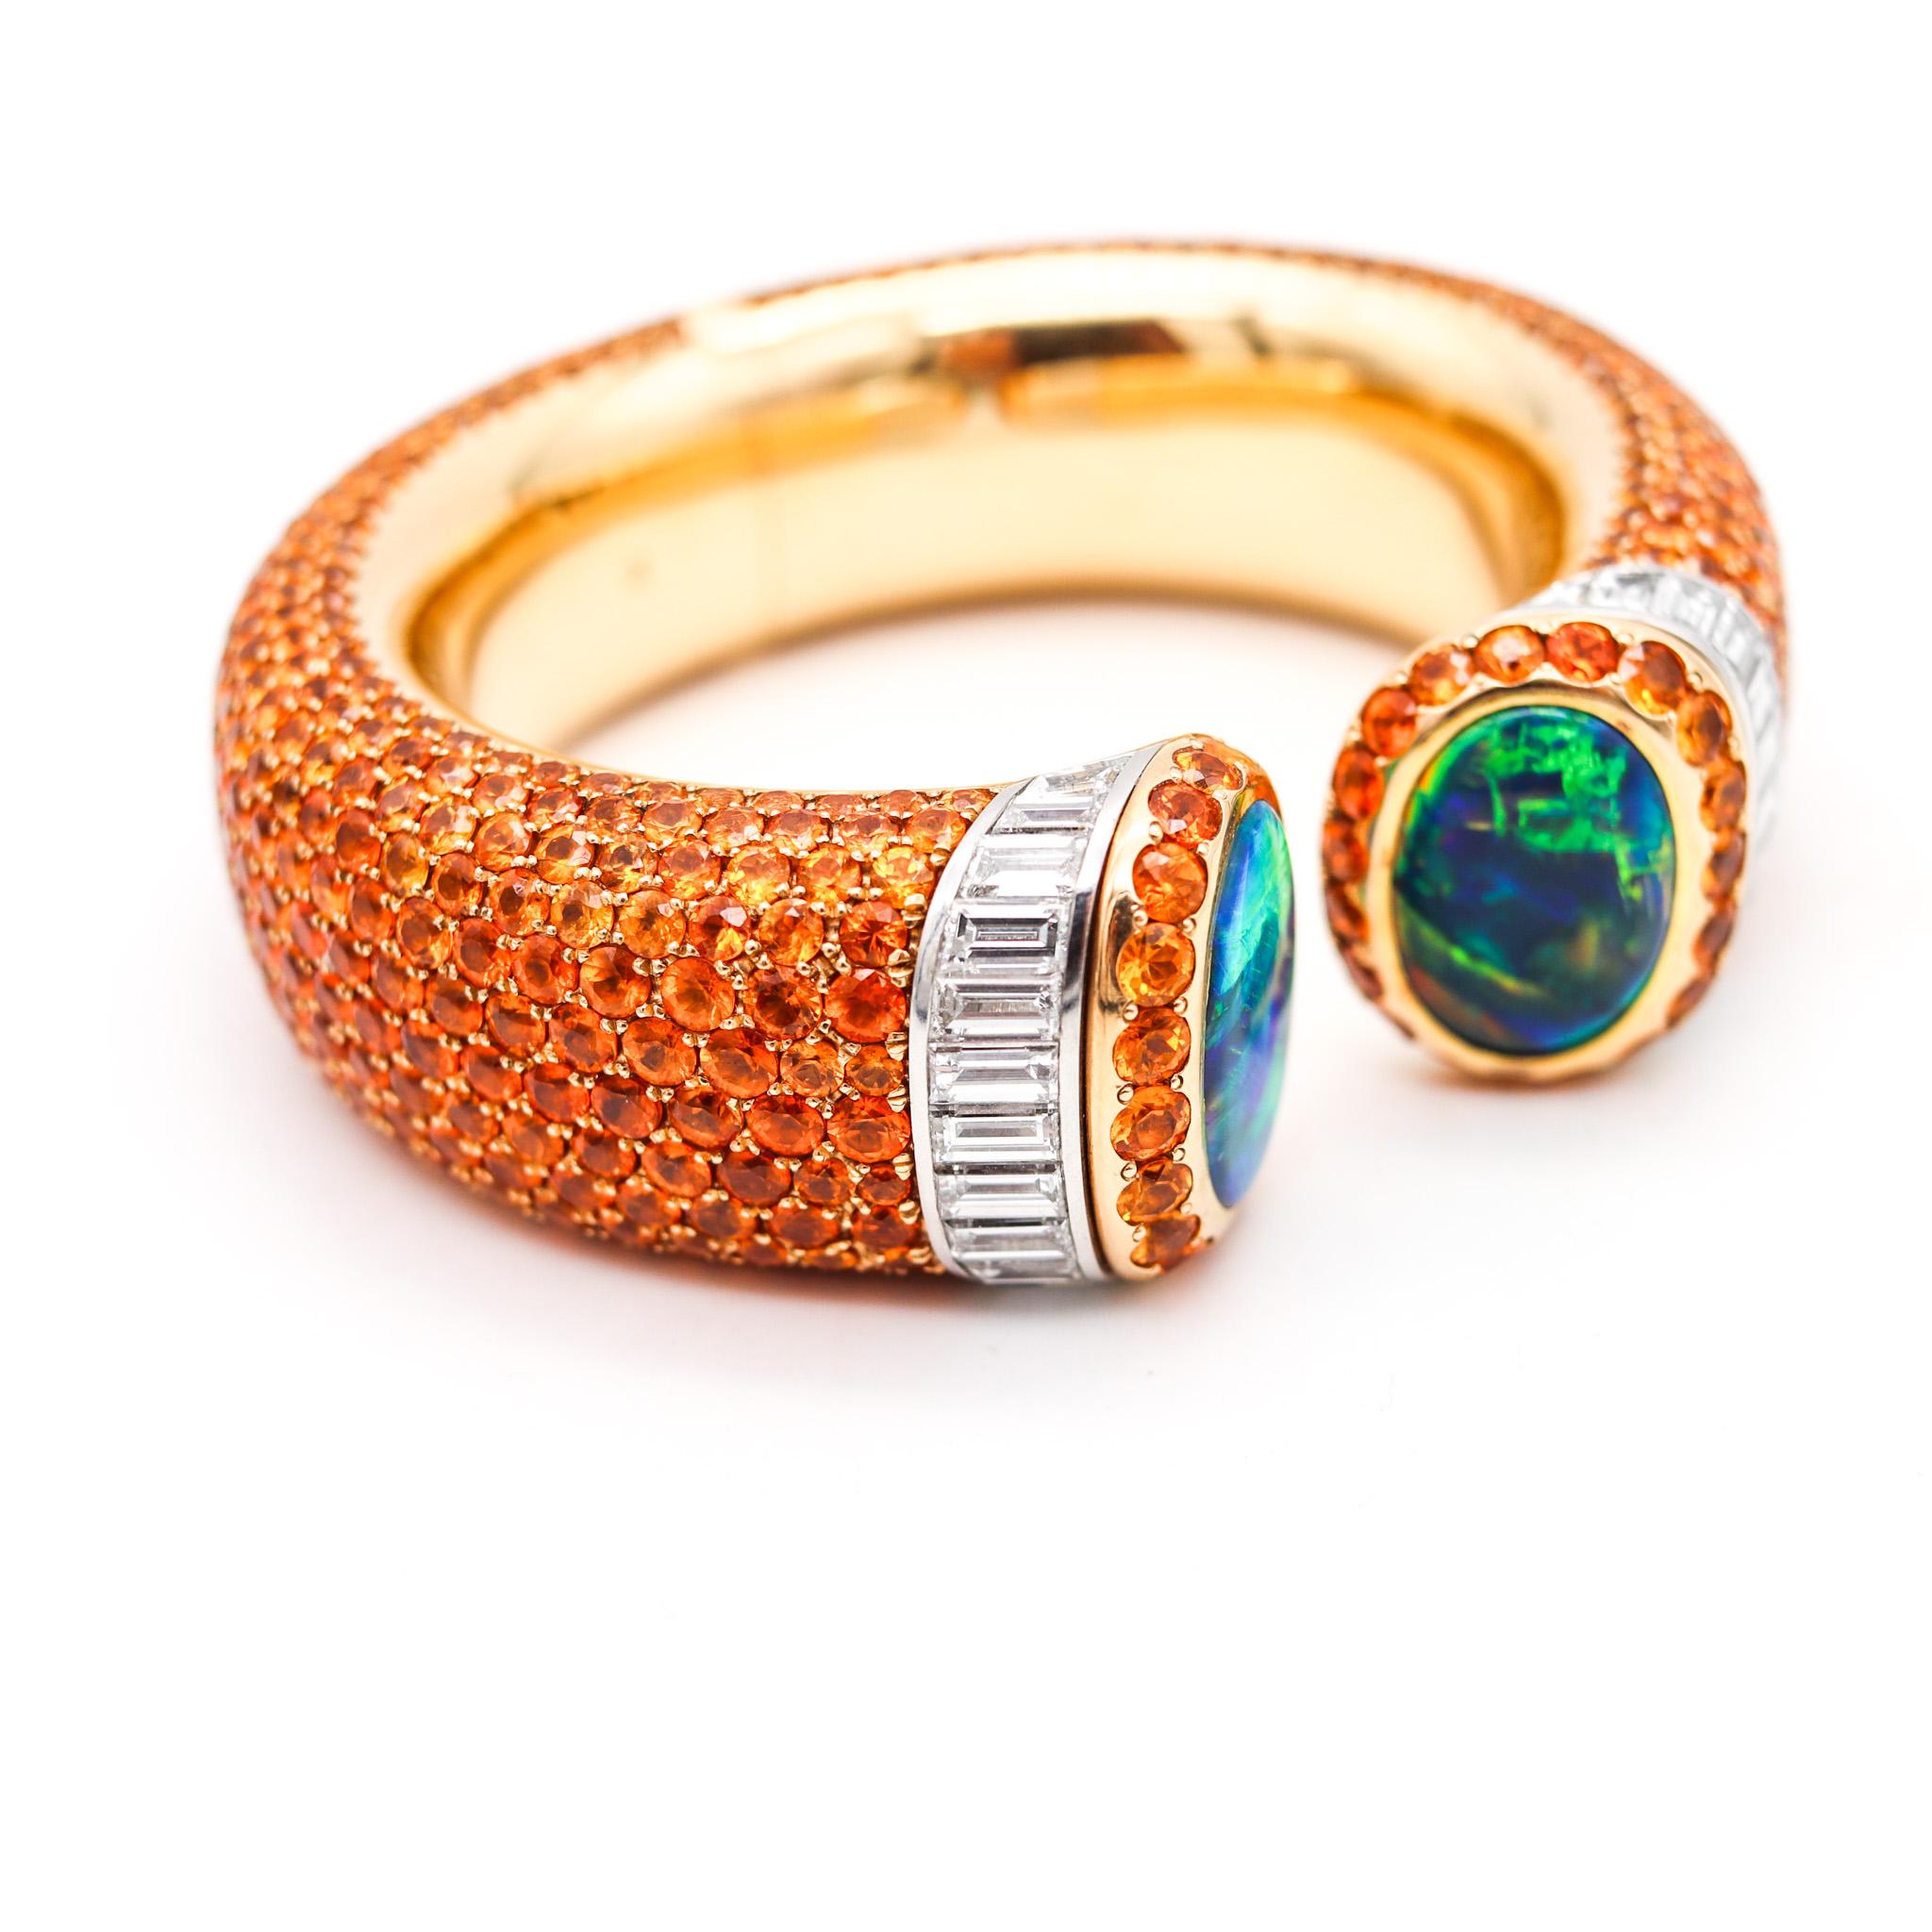 Mixed Cut Hemmerle Mandarin Garnets Cuff Bracelet In 18Kt Gold Platinum Diamonds And Opals For Sale